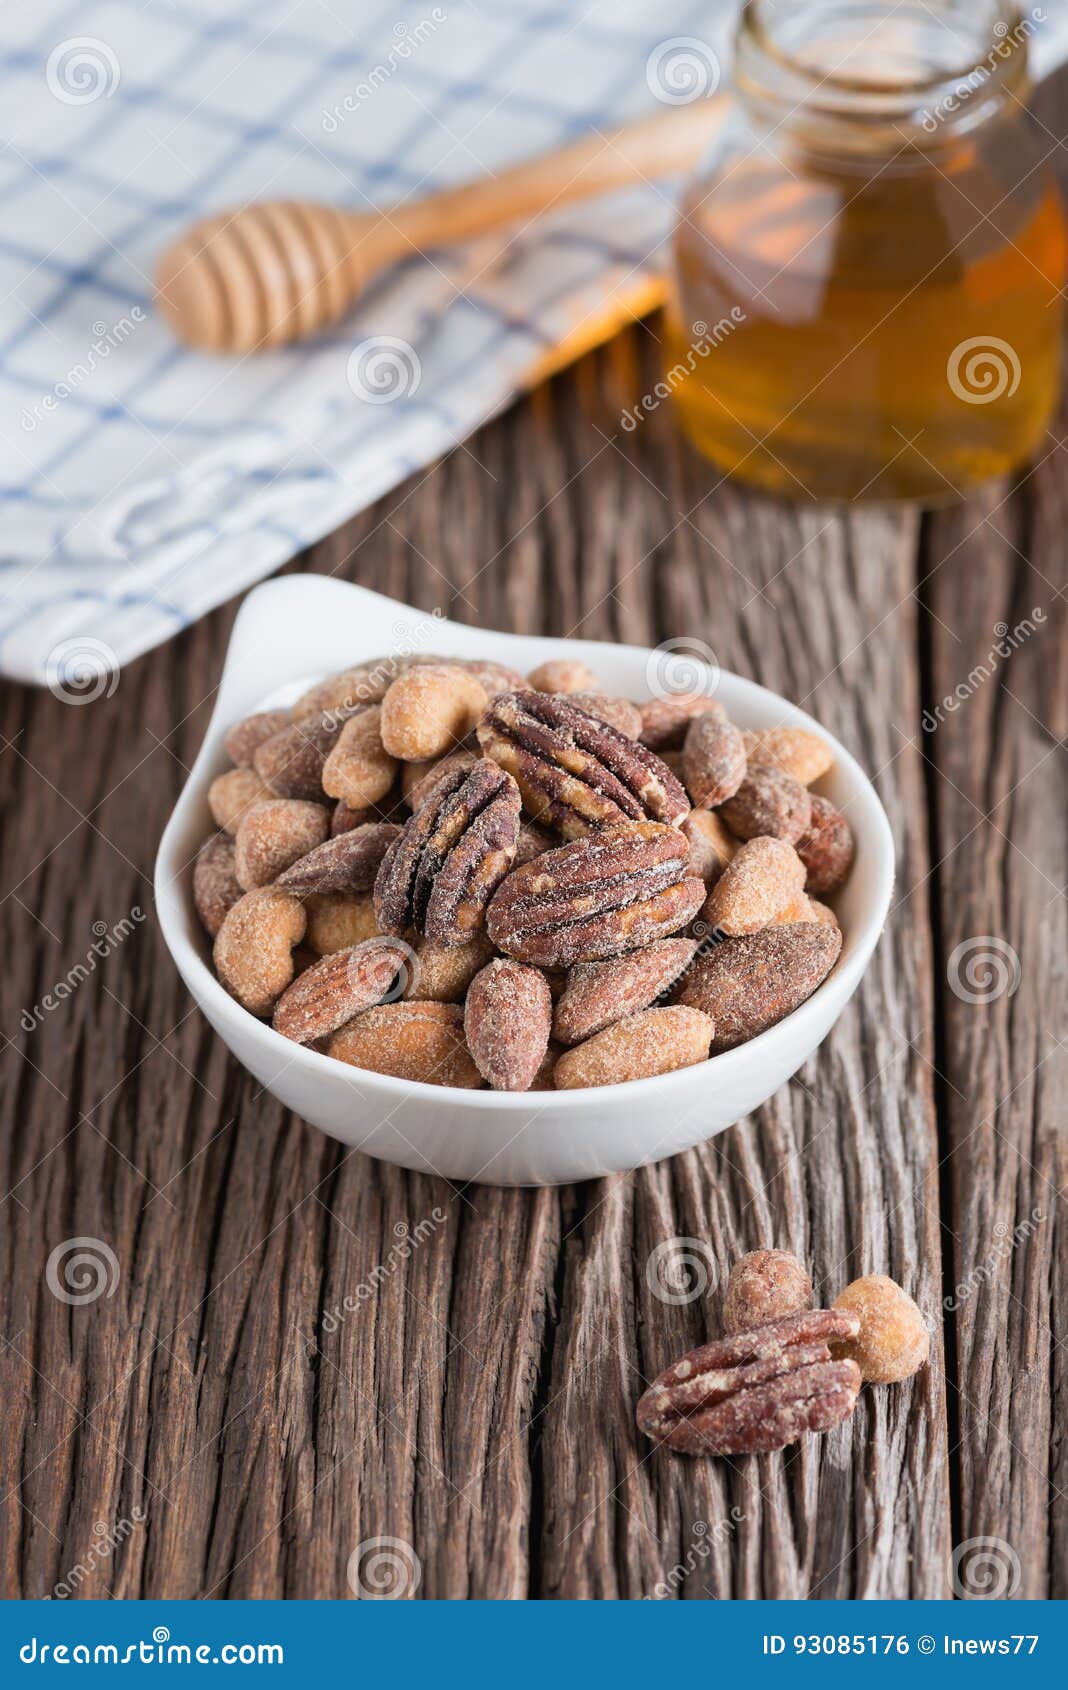 Honey Roasted Mixed Nuts with Honey. Stock Photo - Image of nature